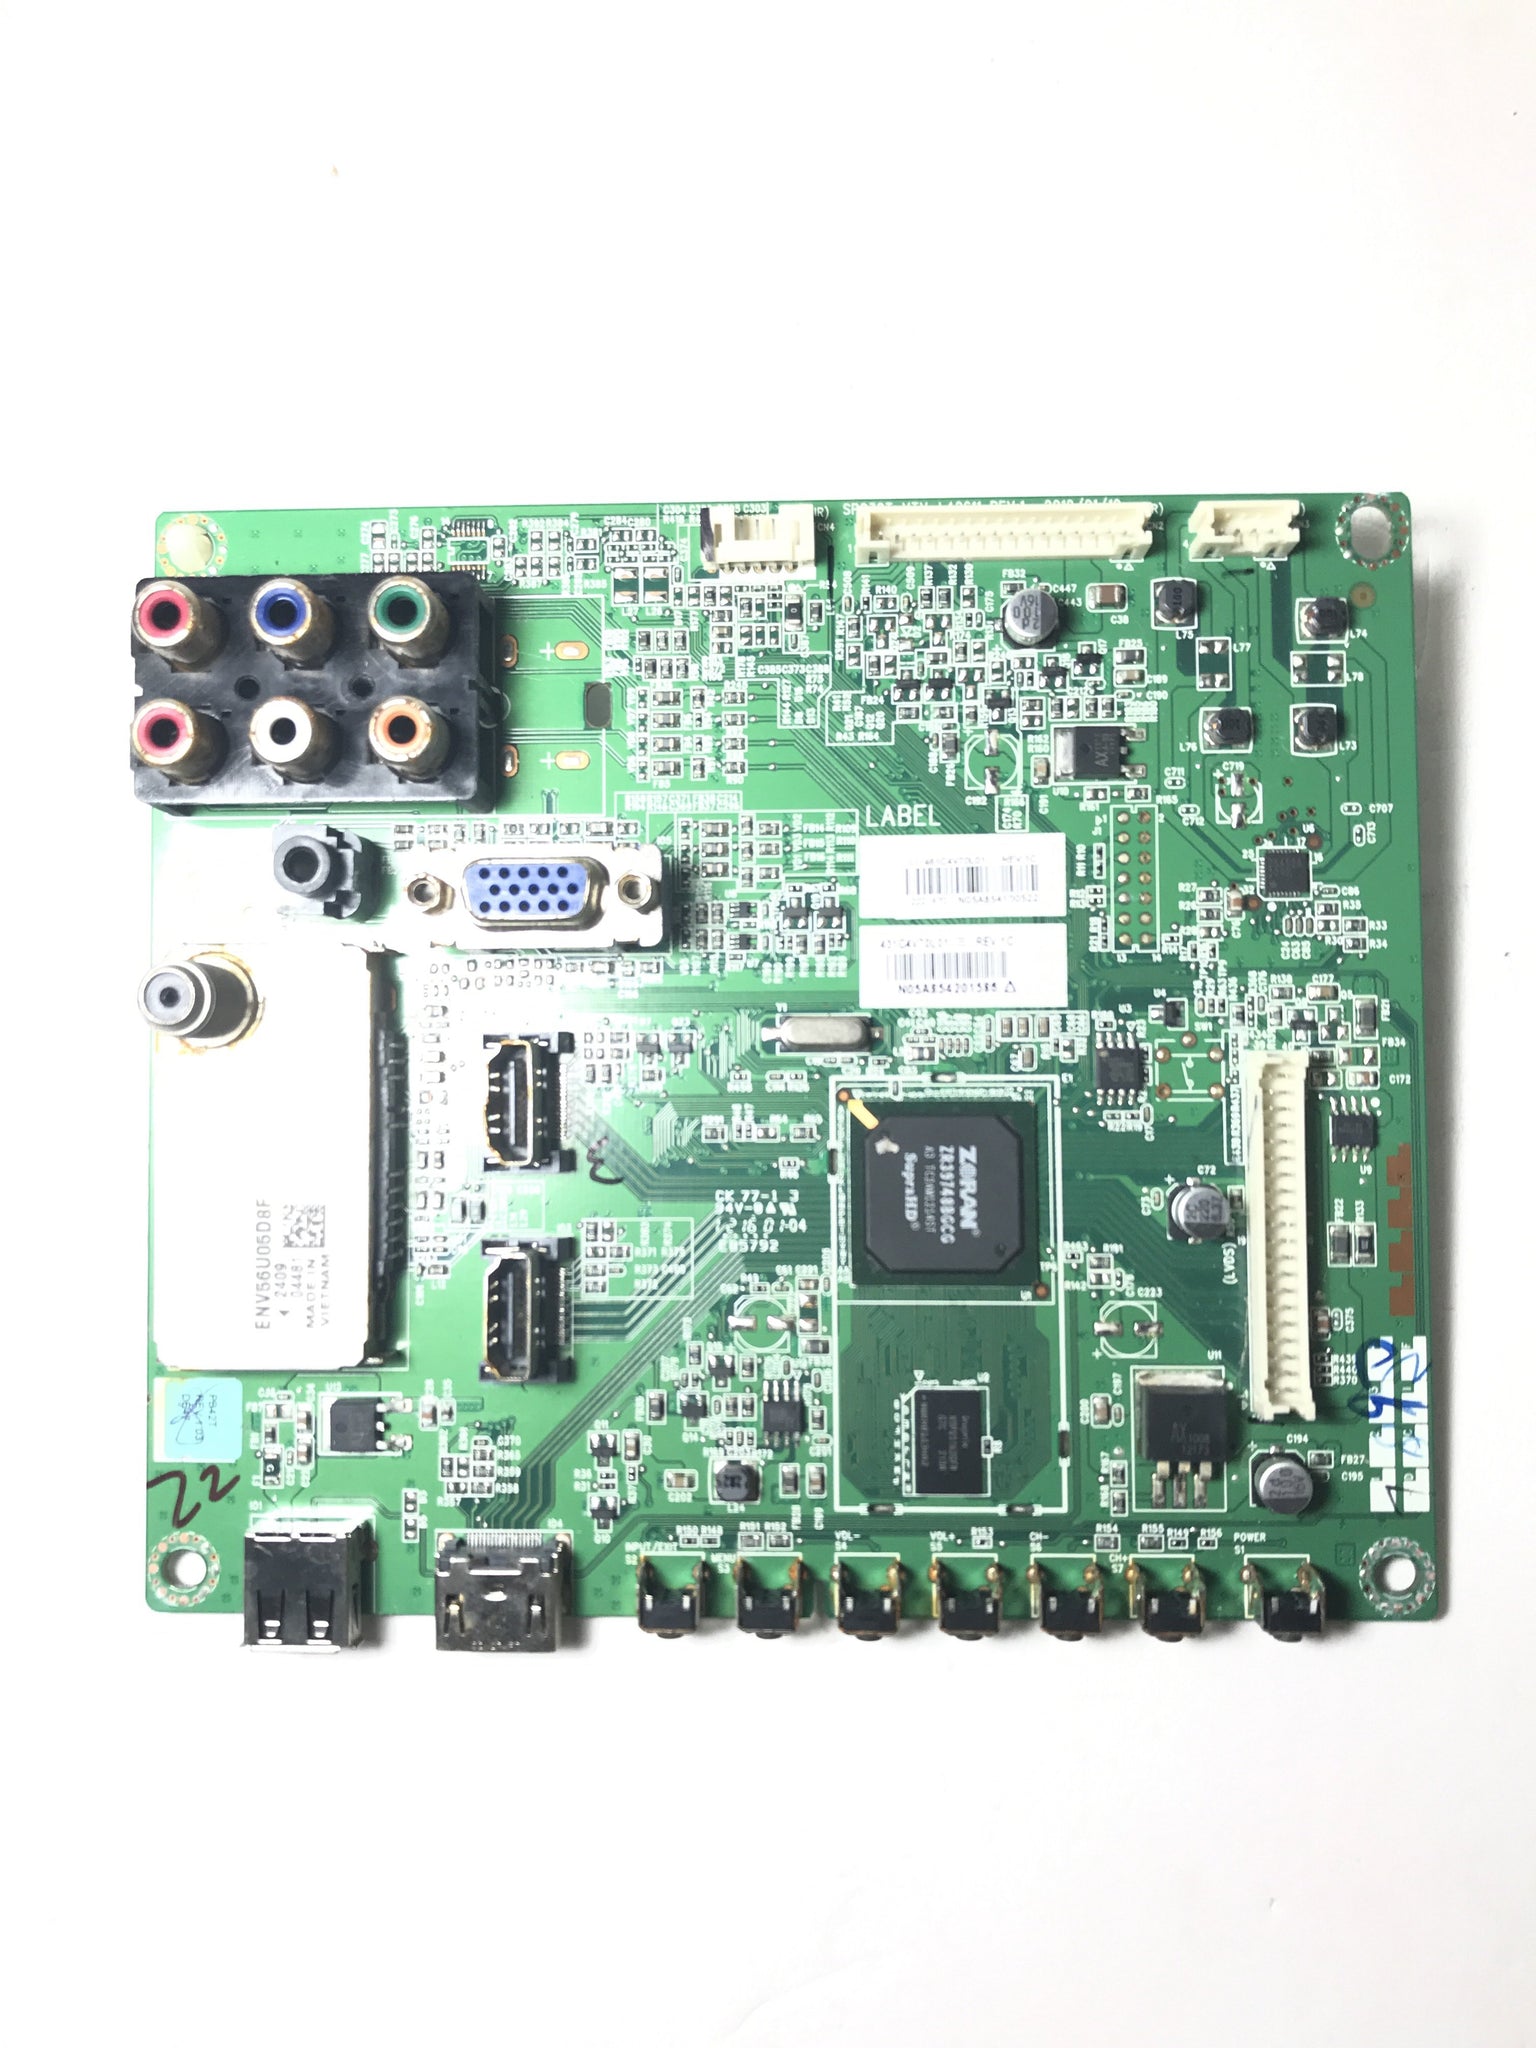 Panasonic TZZ00000020A (431C4V70L01) Main Board for TC-L42U5